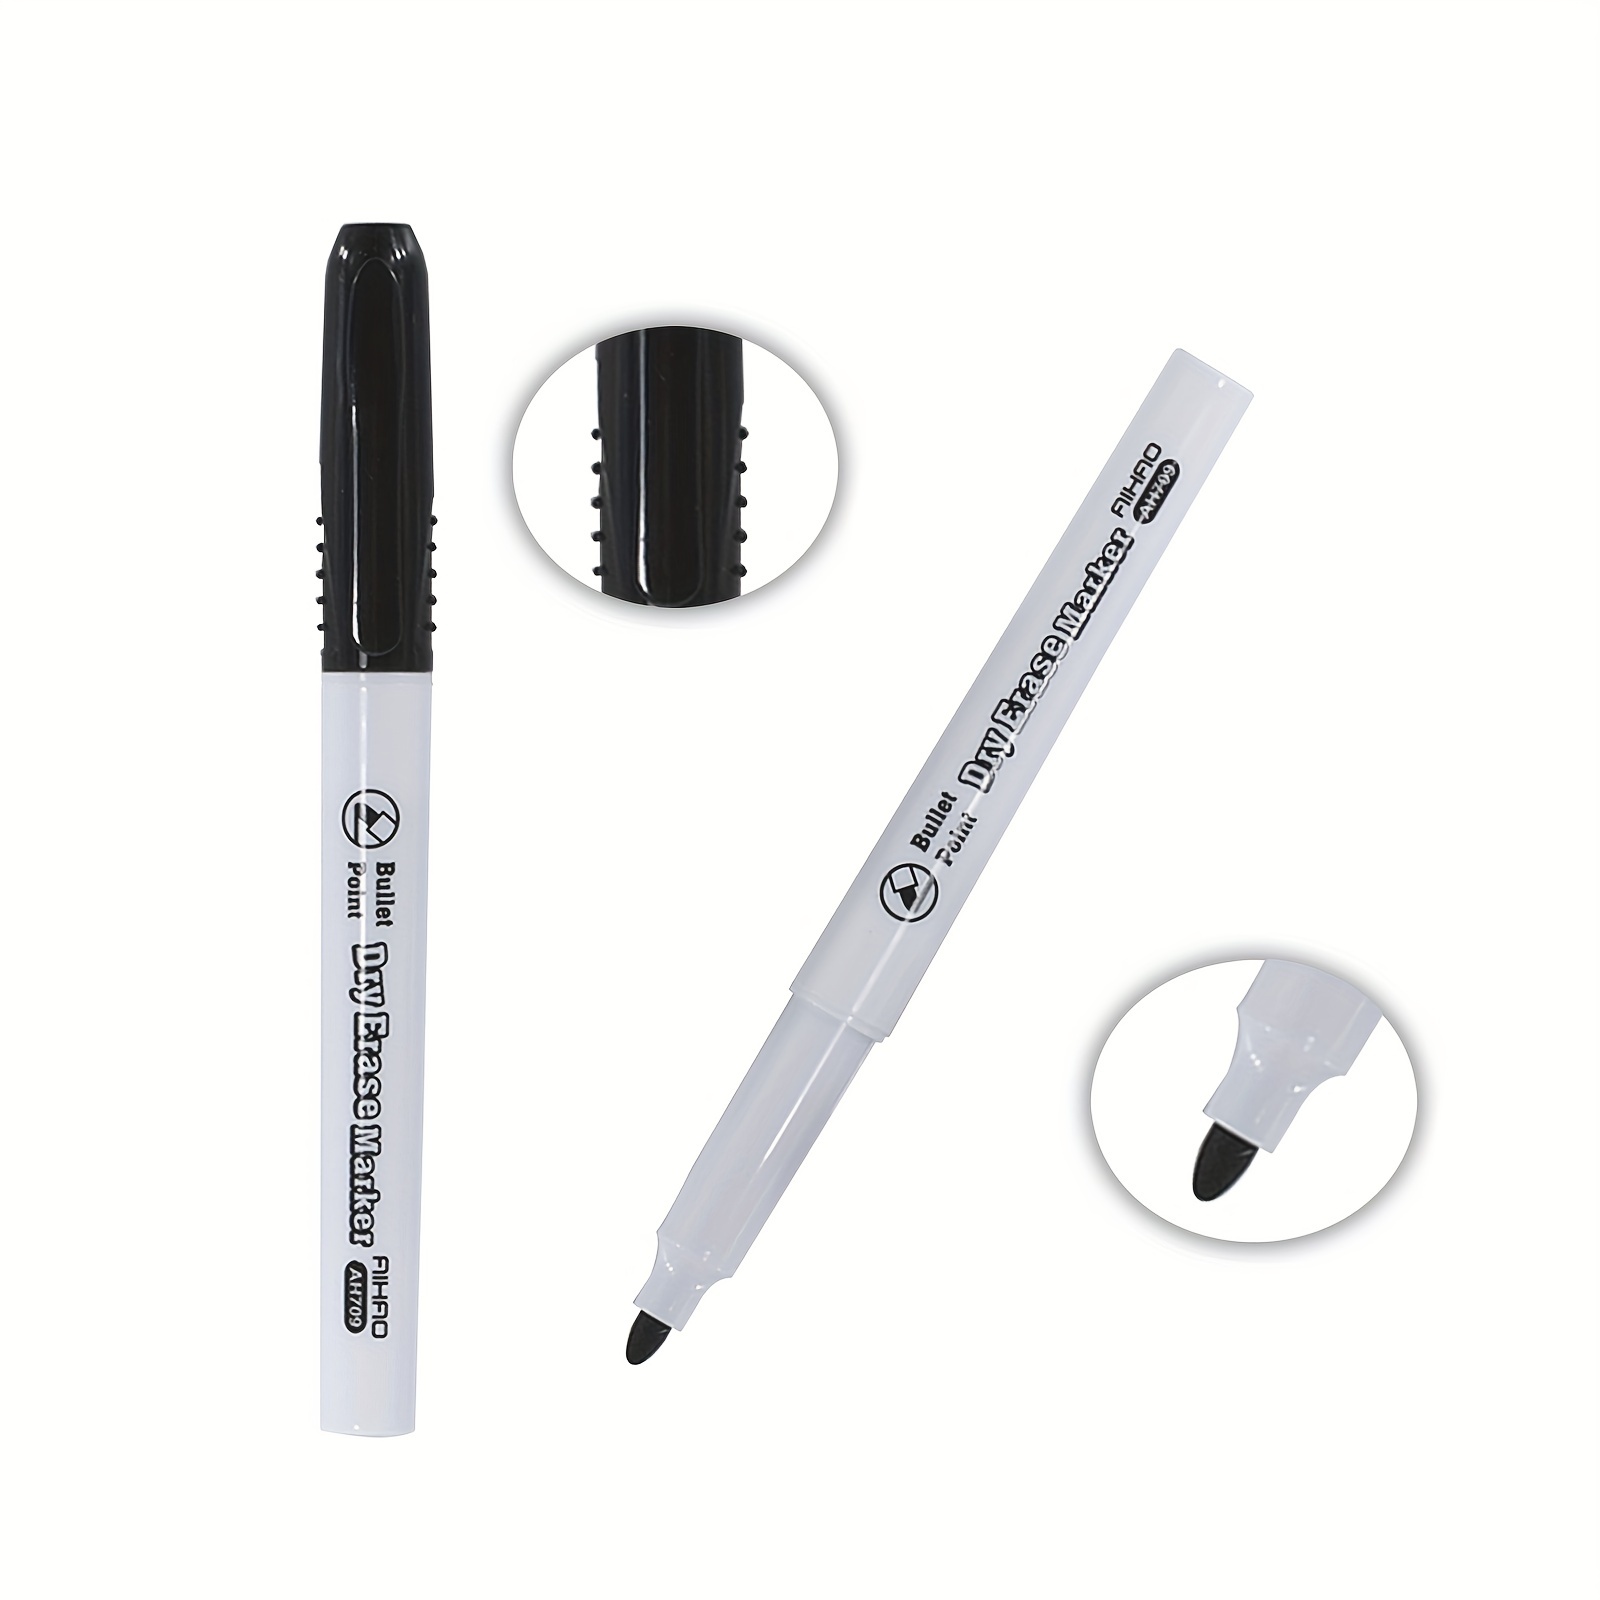 Low-Odor Dry-Erase Marker, Extra-Fine Bullet Tip, Black, 4/Pack - Reliable  Paper